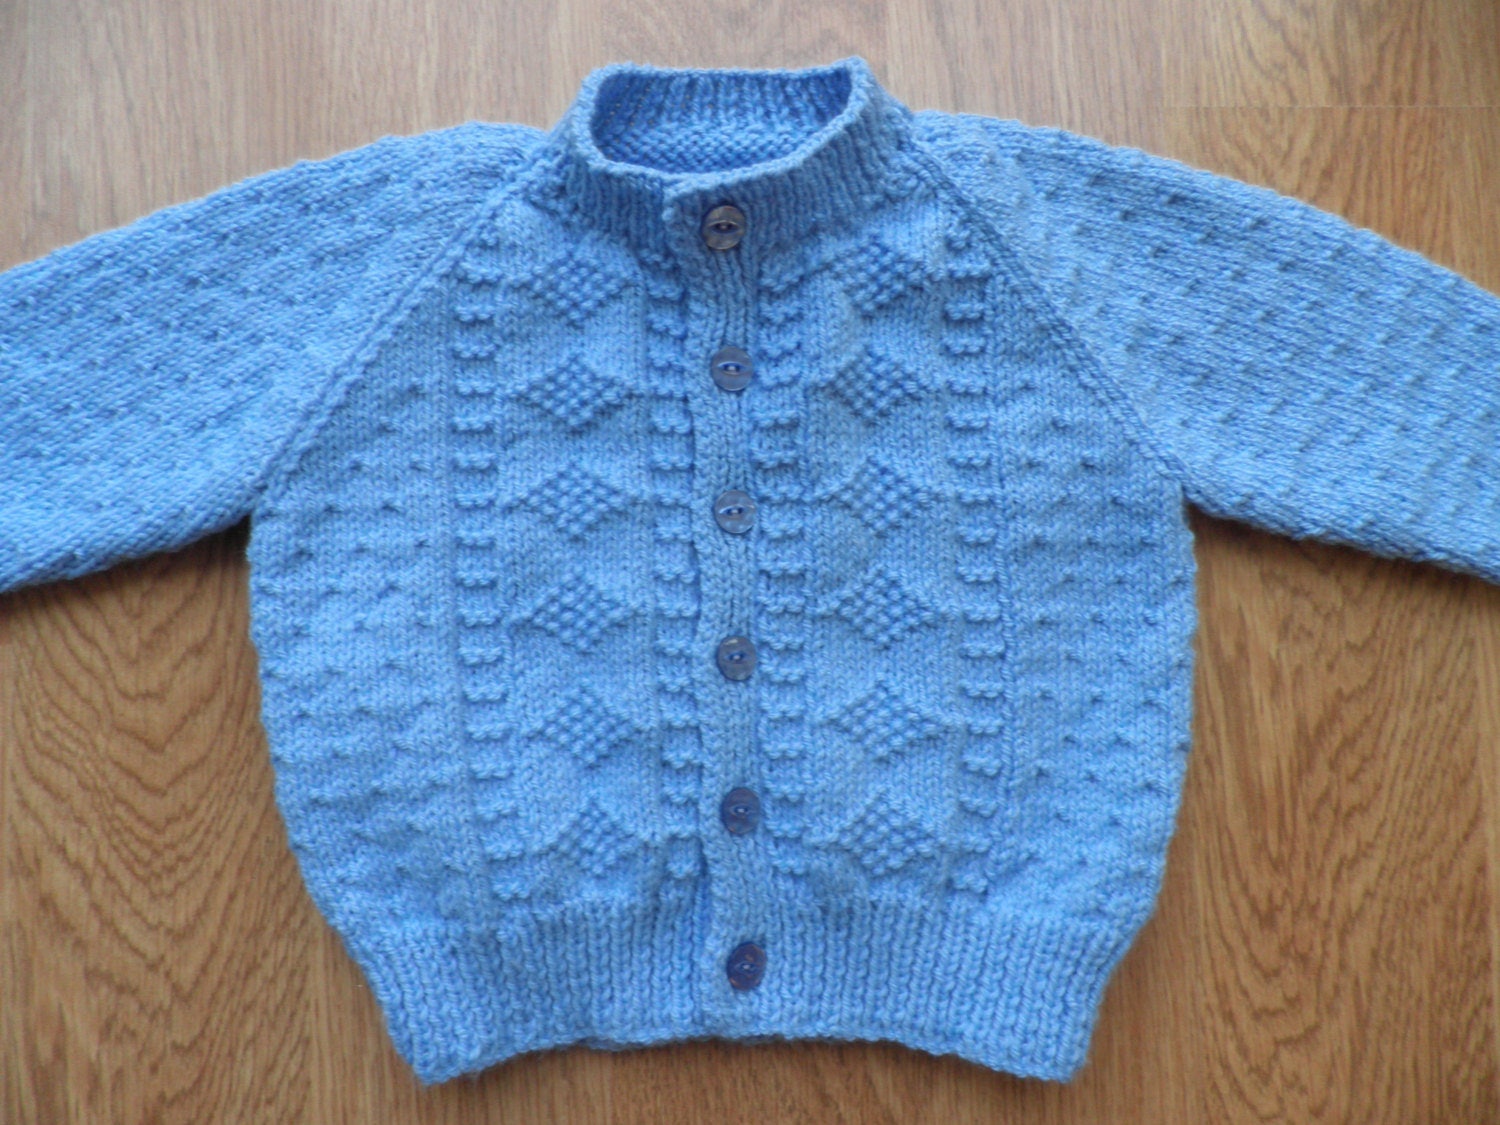 Boy's sweater handknitted cardigan blue cardigan age 1